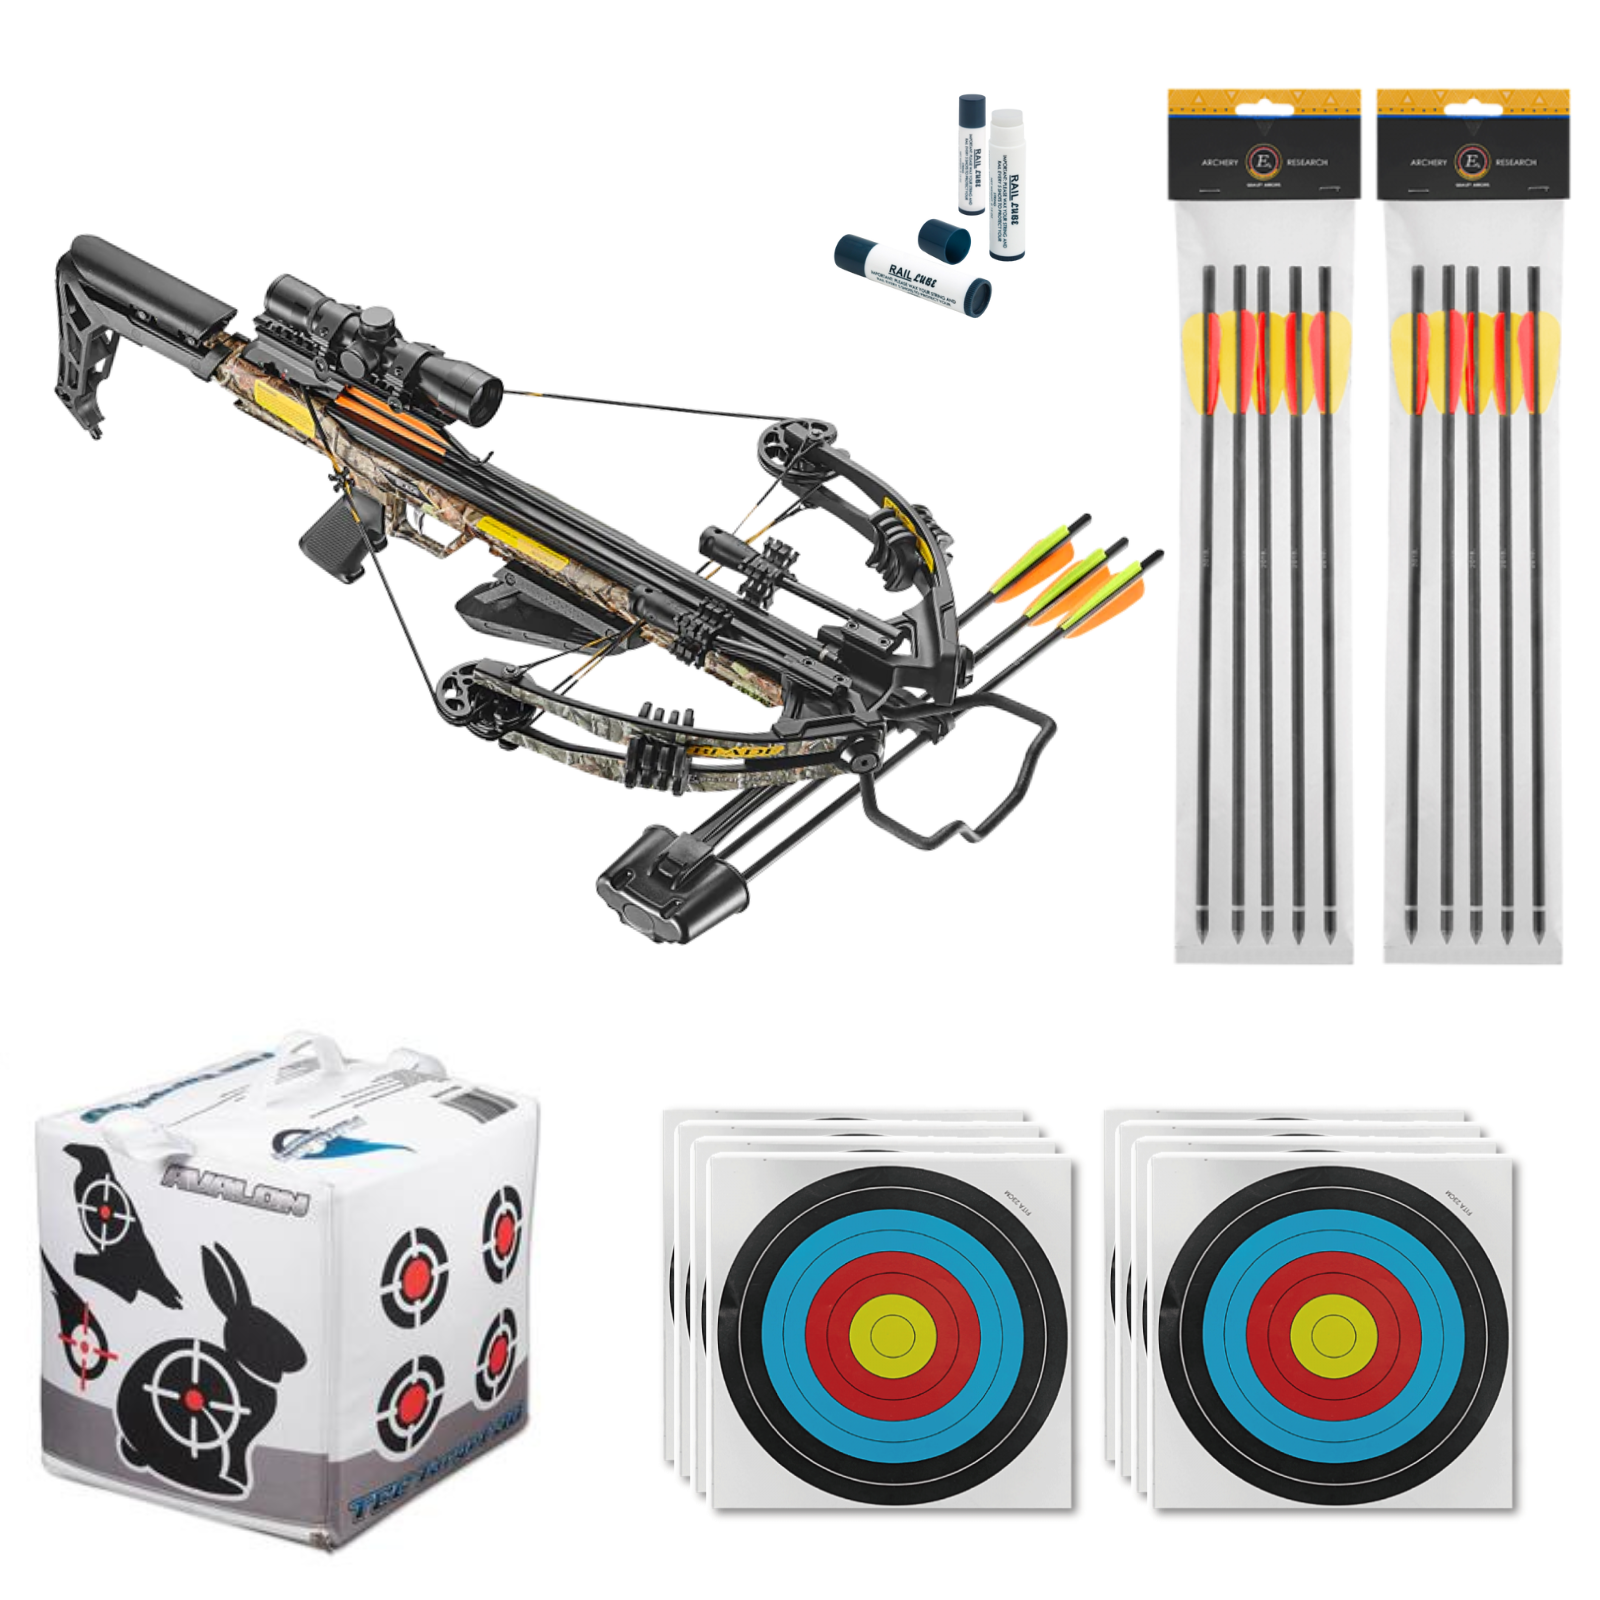 EK Archery Blade+ Compound Crossbow Bundle